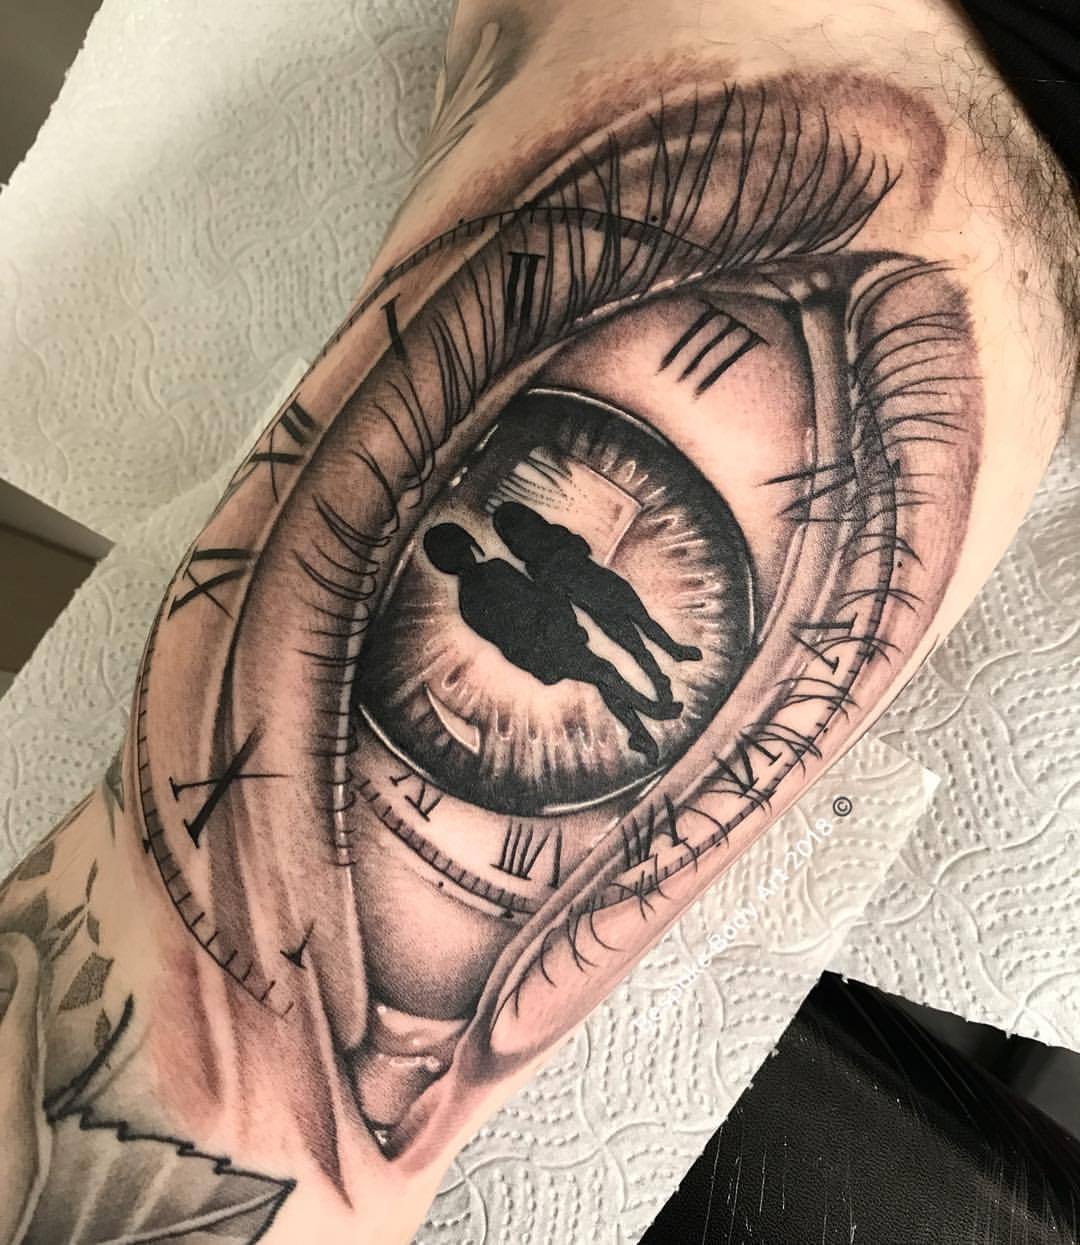 Creepy Eye Tattoo on Arm | TikTok